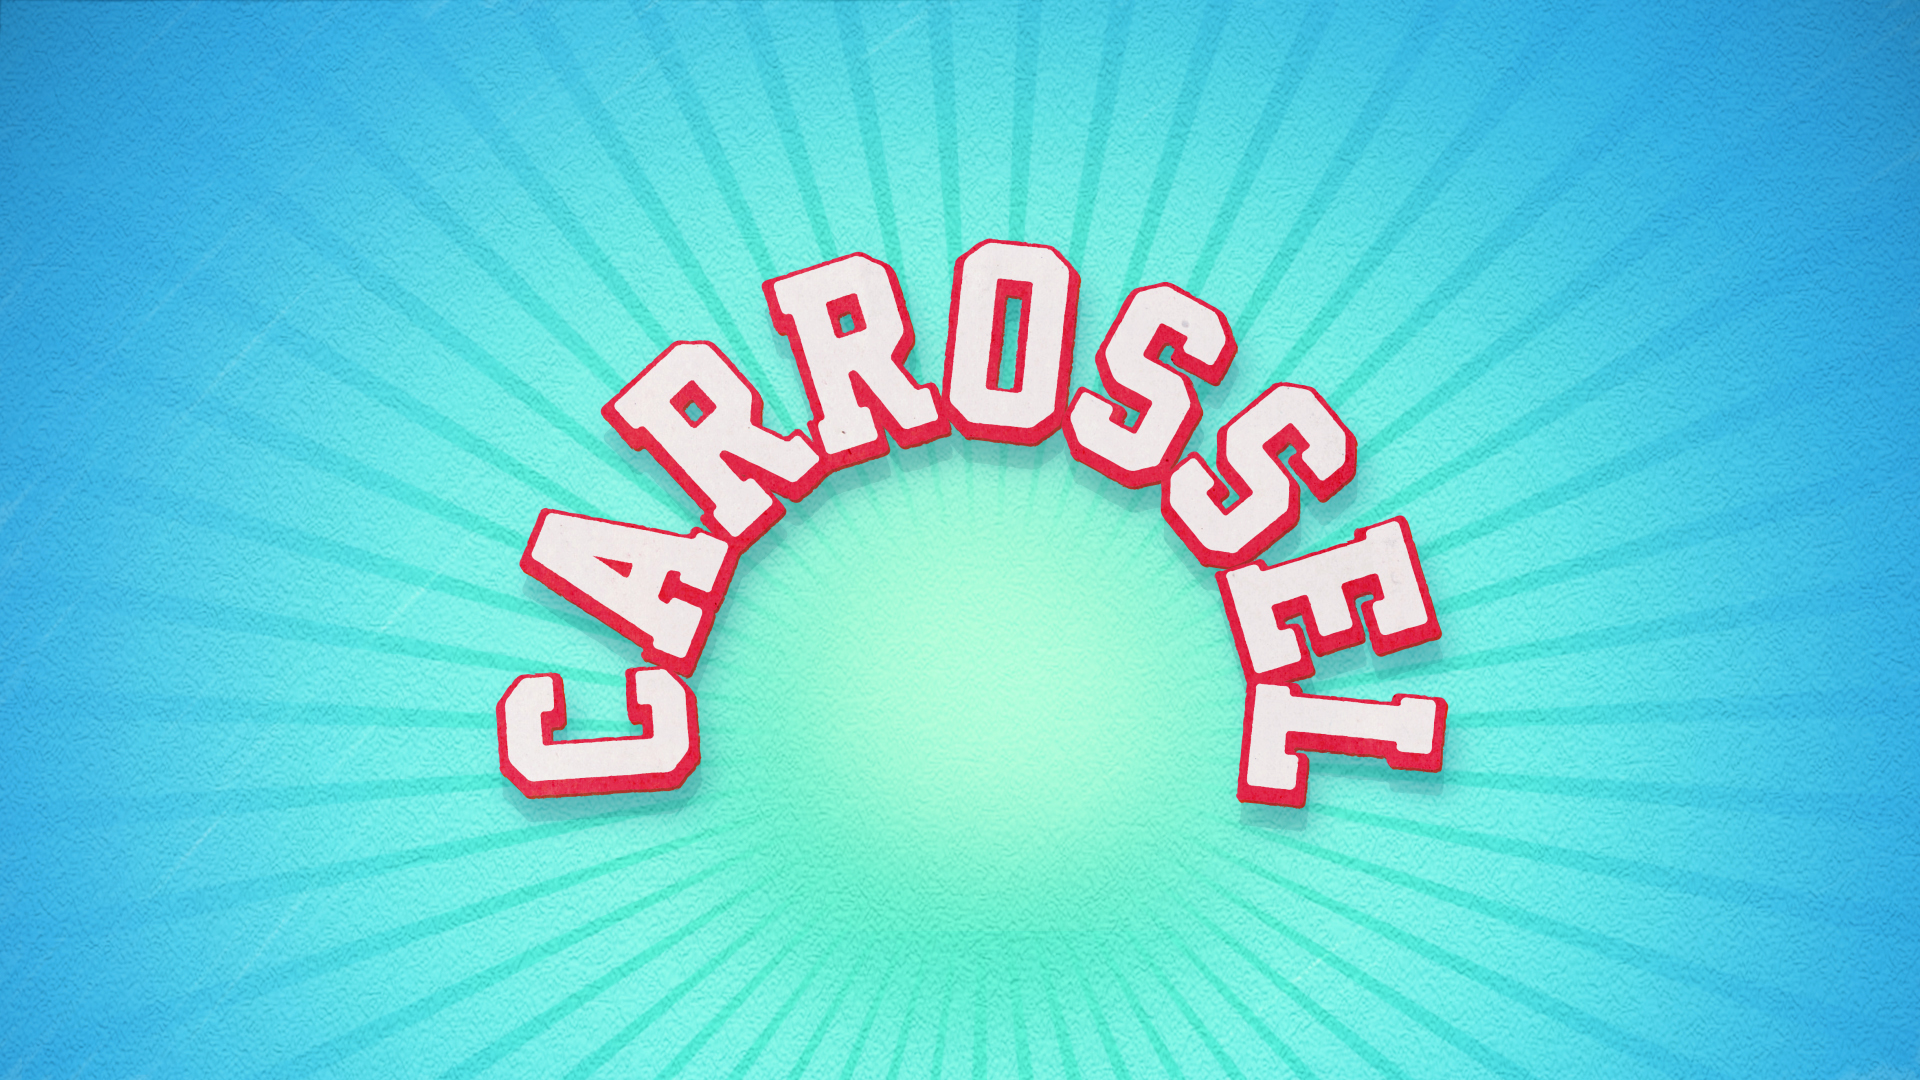 Carrossel Logo 2018